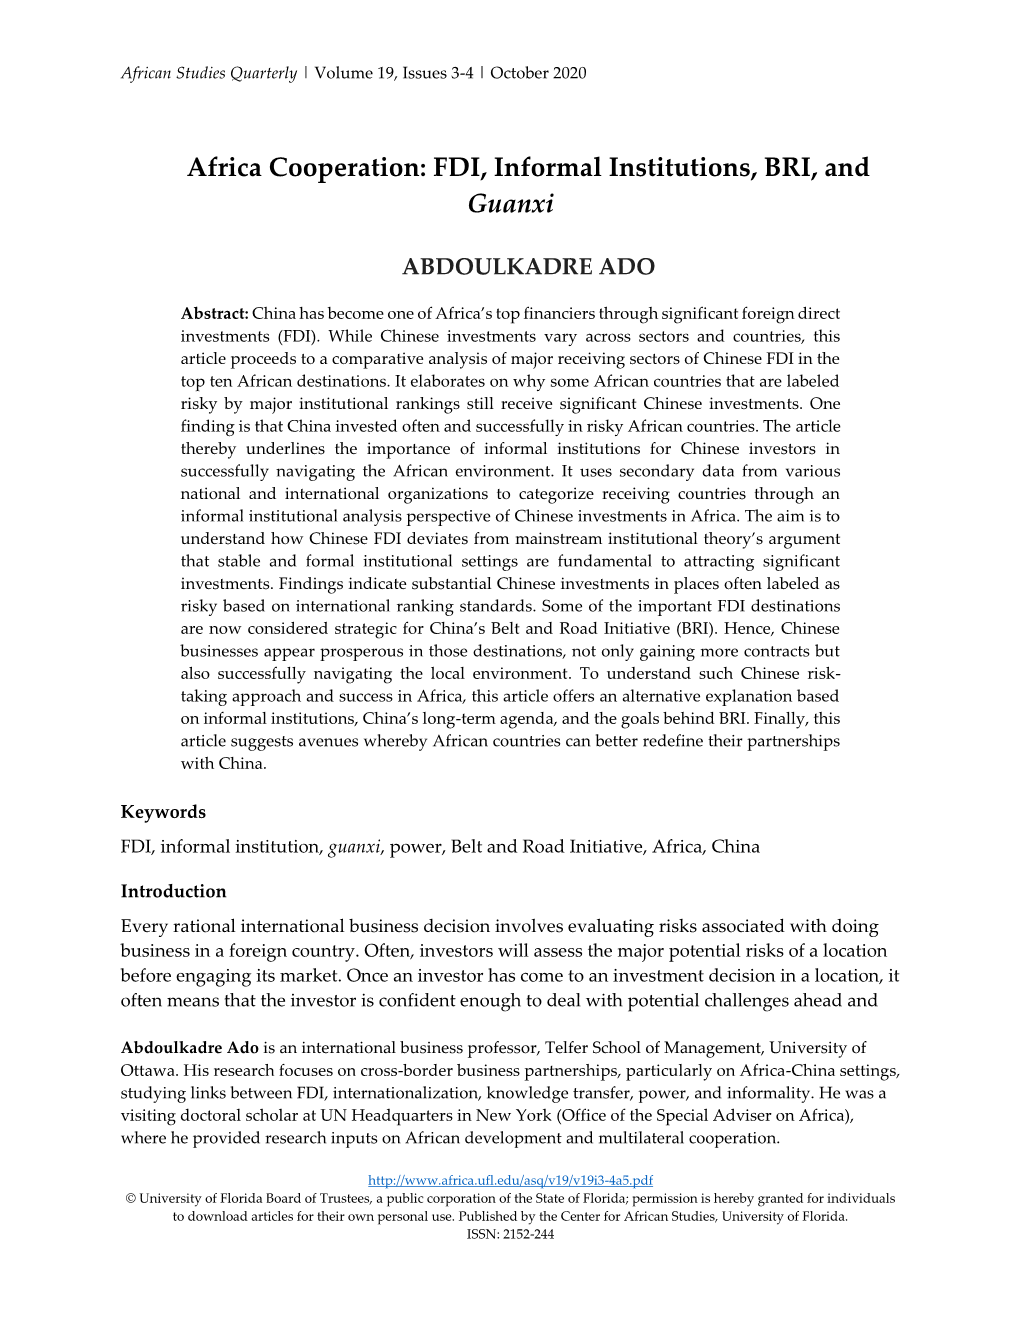 Africa Cooperation: FDI, Informal Institutions, BRI, and Guanxi